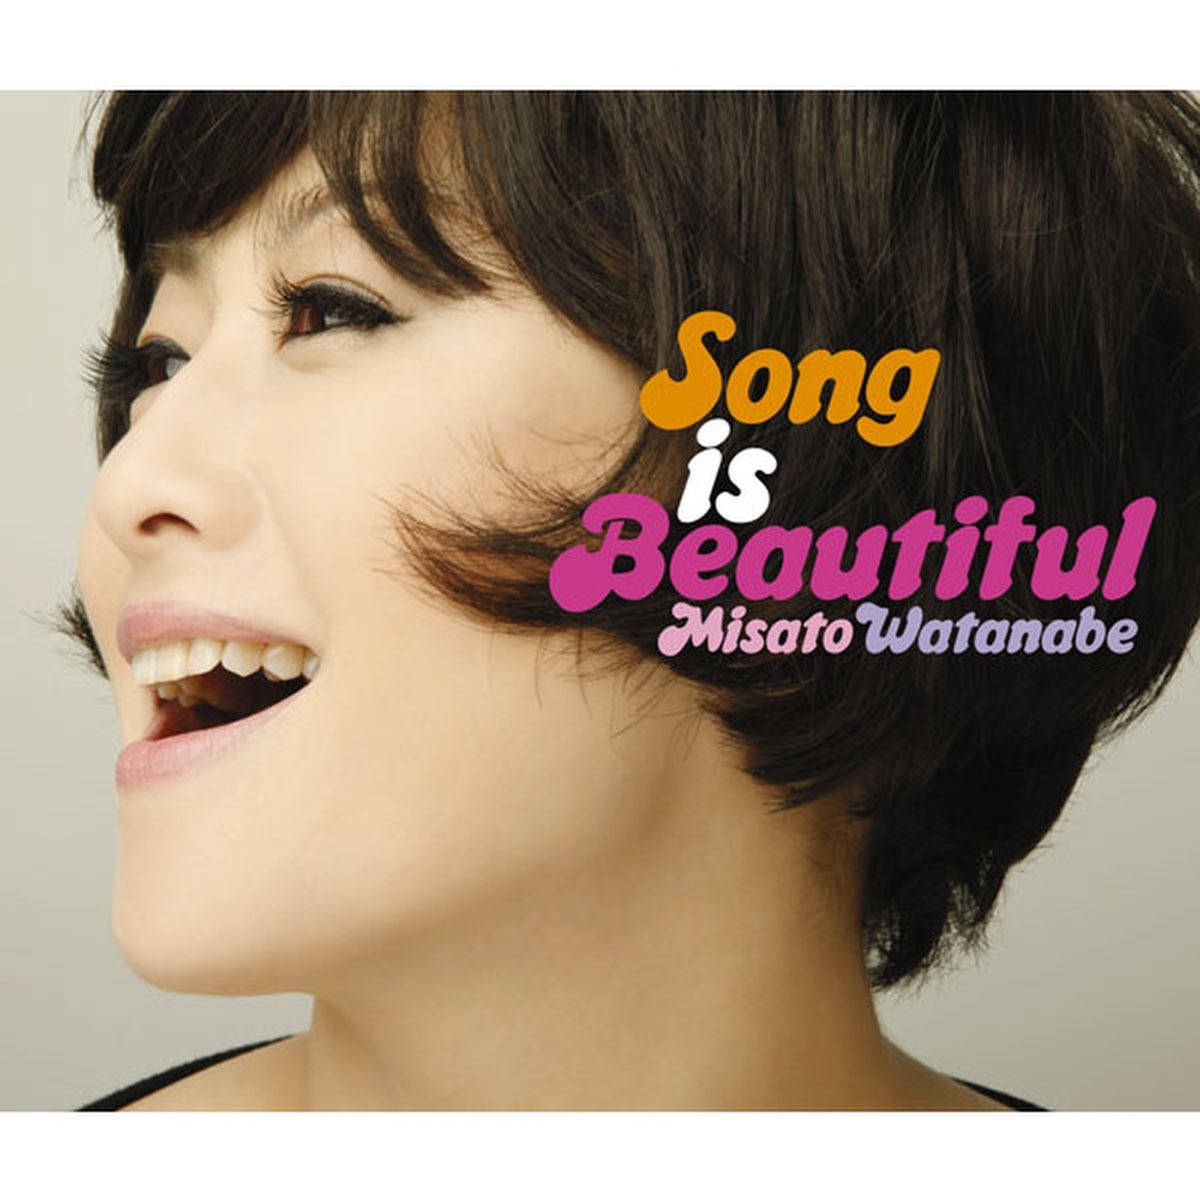 Song is Beautiful - 渡辺美里のアルバム - Apple Music